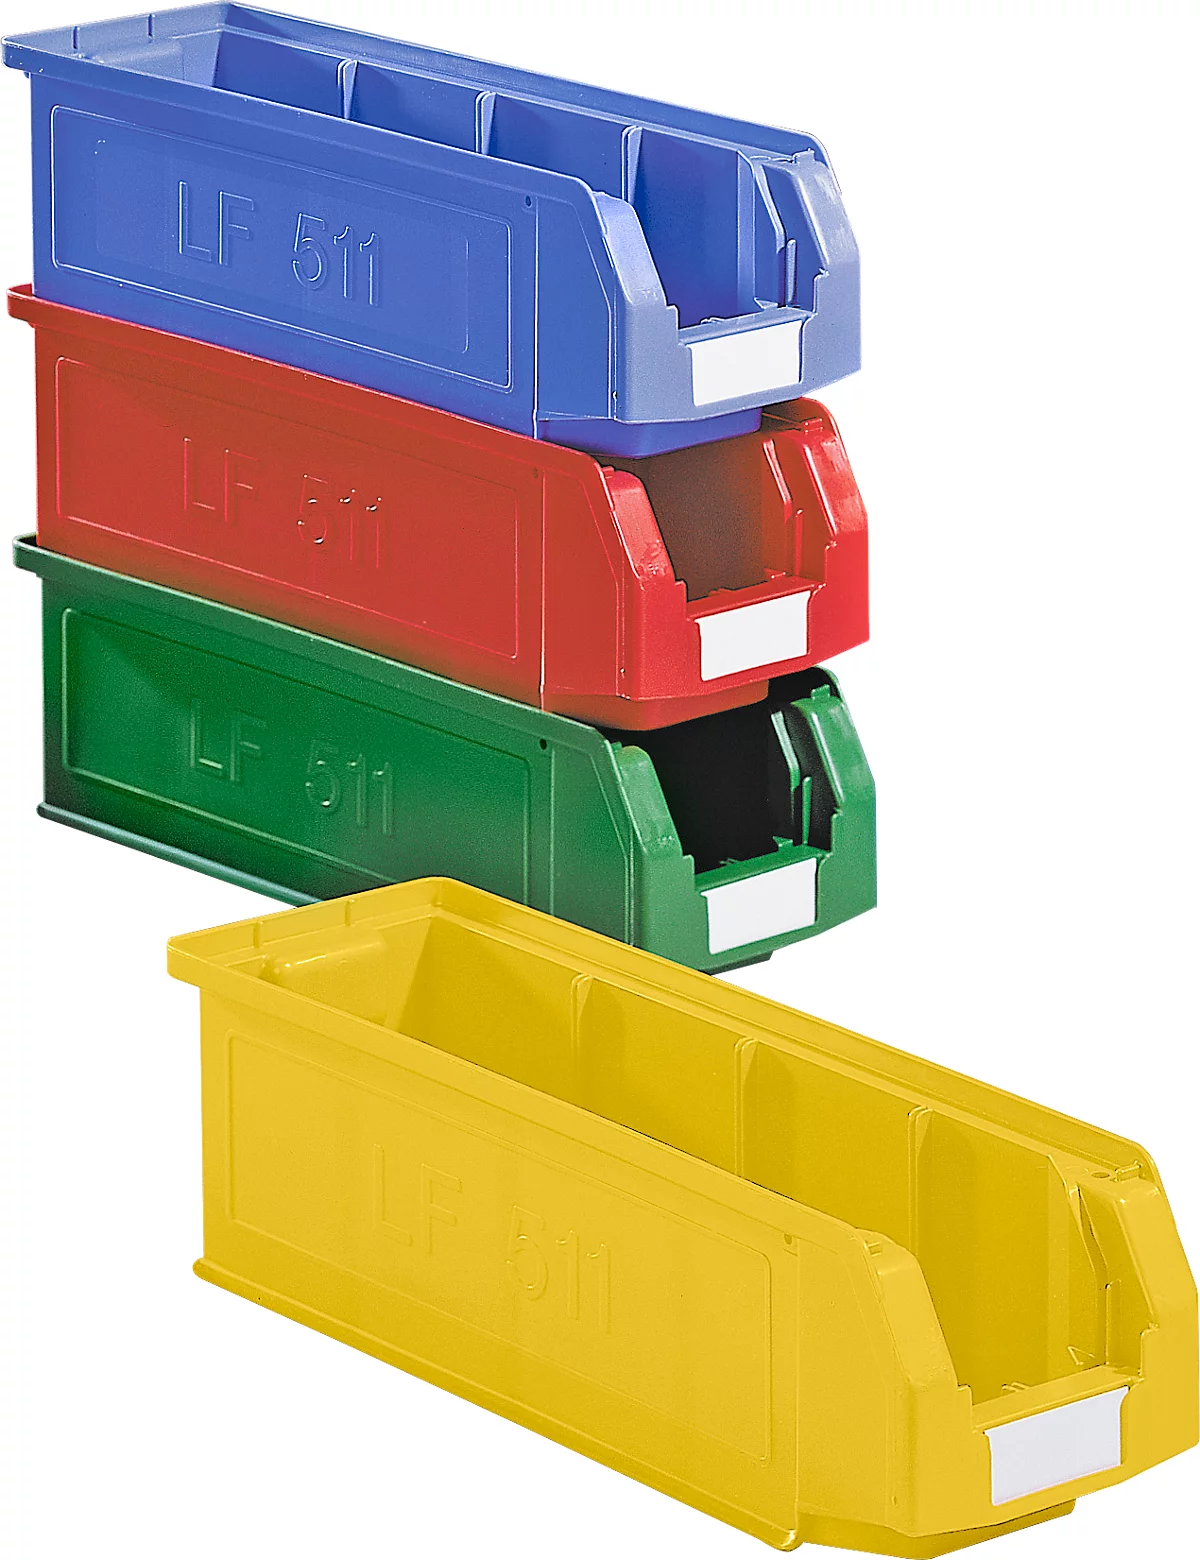 Caja con abertura frontal LF 511, plástico, 7,6 l, amarillo